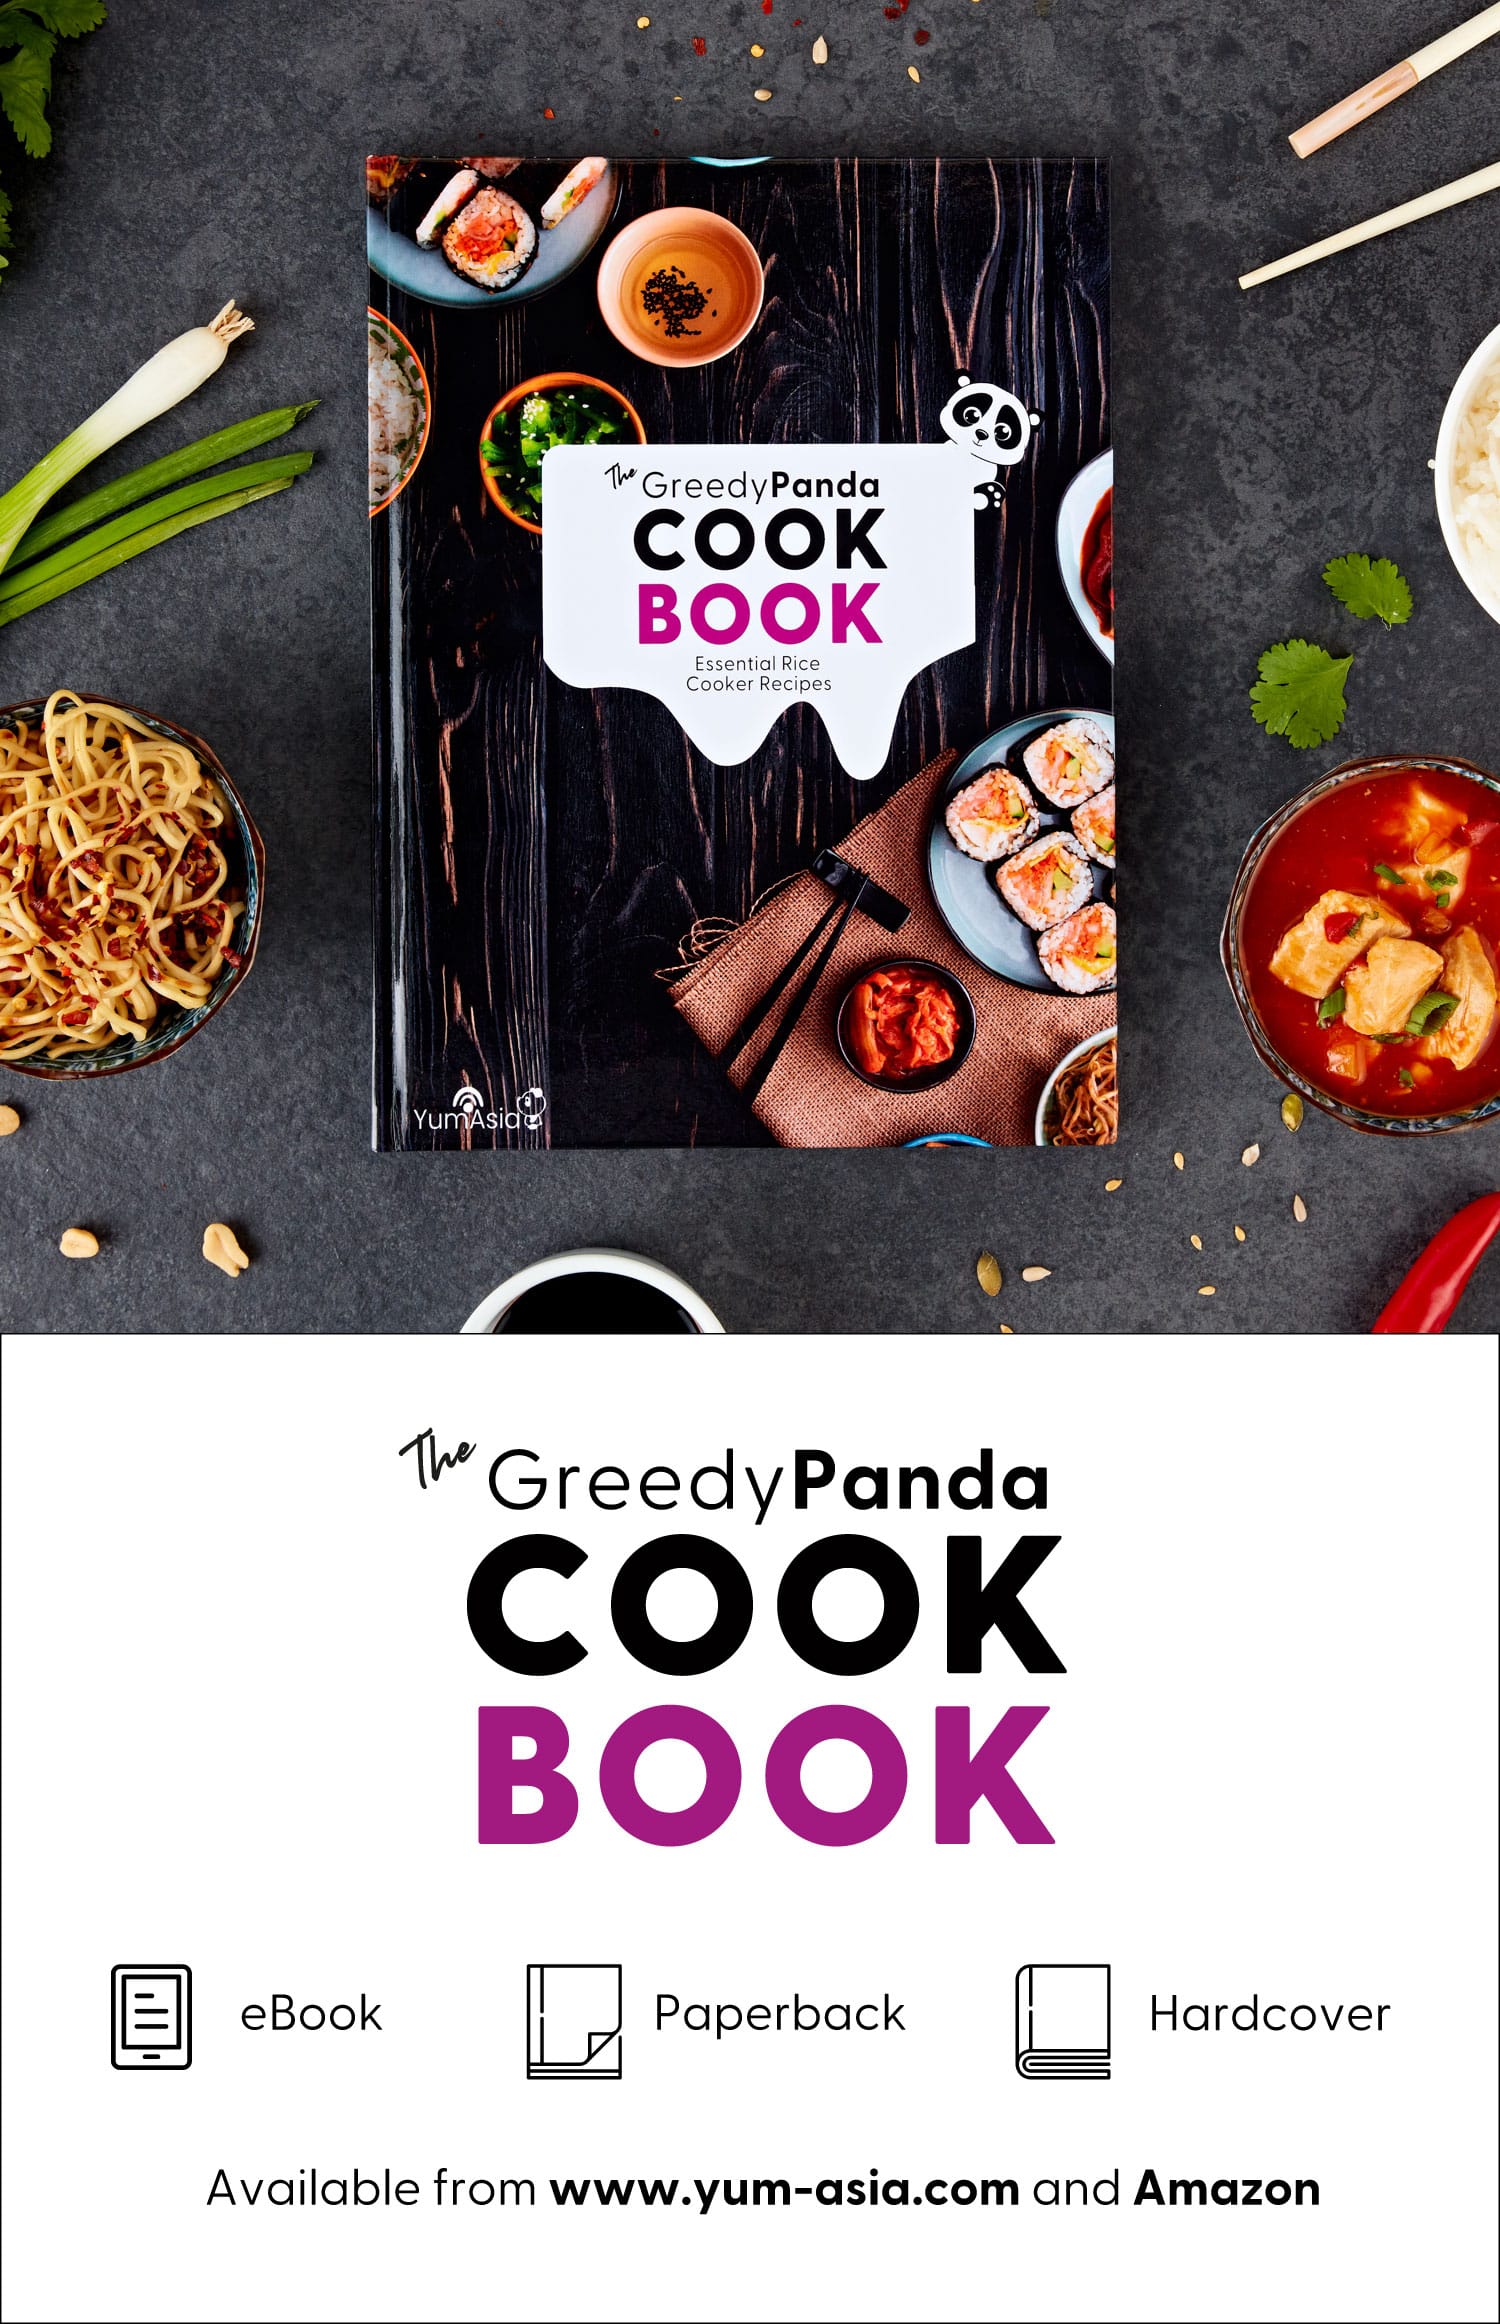 Greedy Panda Cook Book by Yum Asia